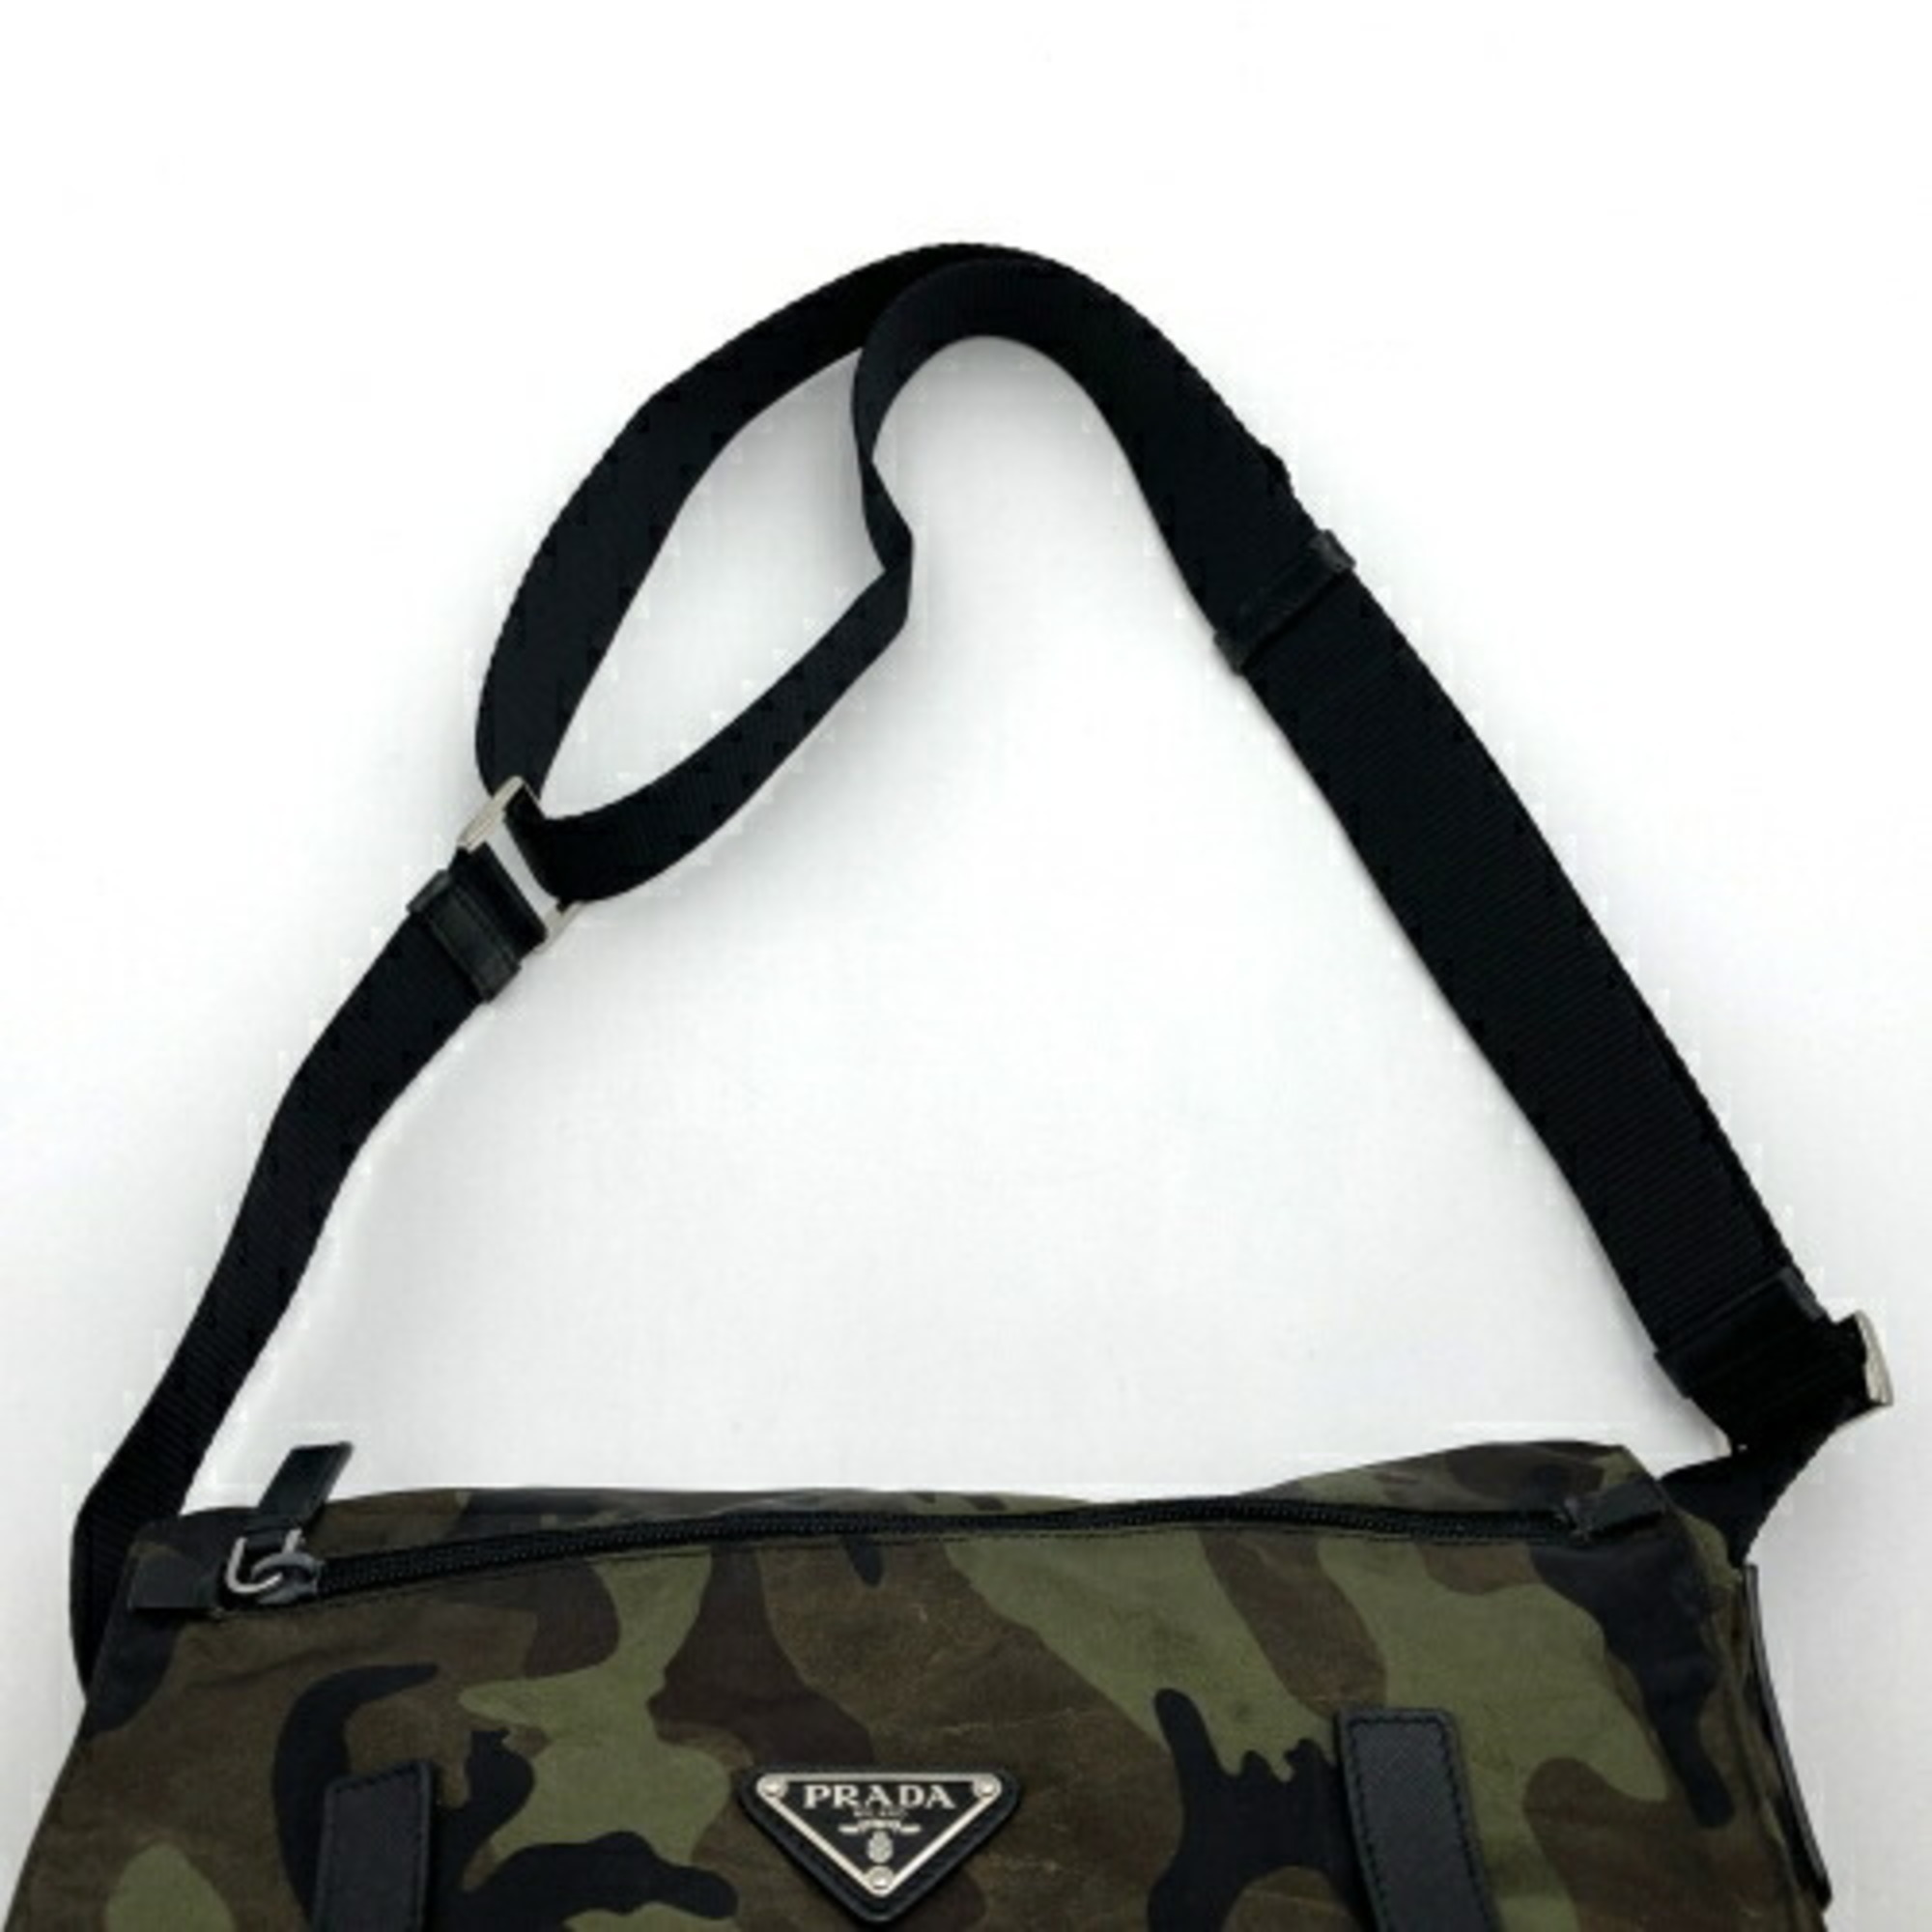 PRADA Prada shoulder bag camouflage pattern khaki green nylon men's women's ITNHPPP8I7VS